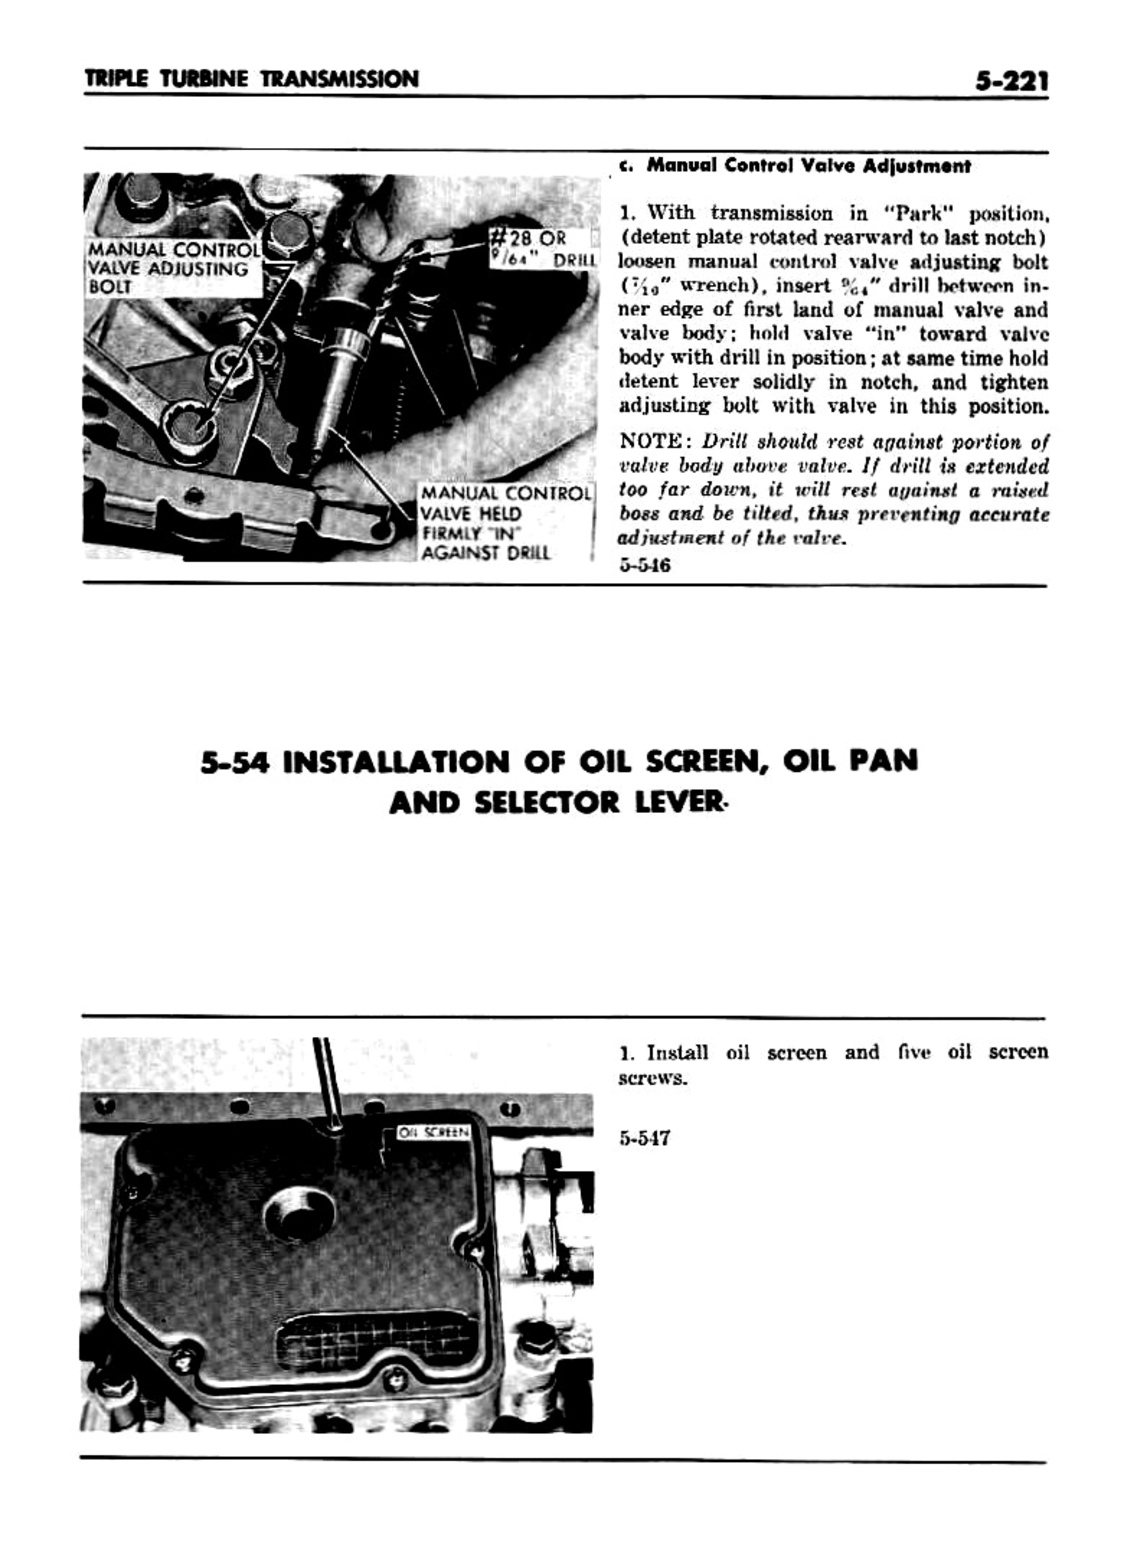 n_06 1959 Buick Shop Manual - Auto Trans-221-221.jpg